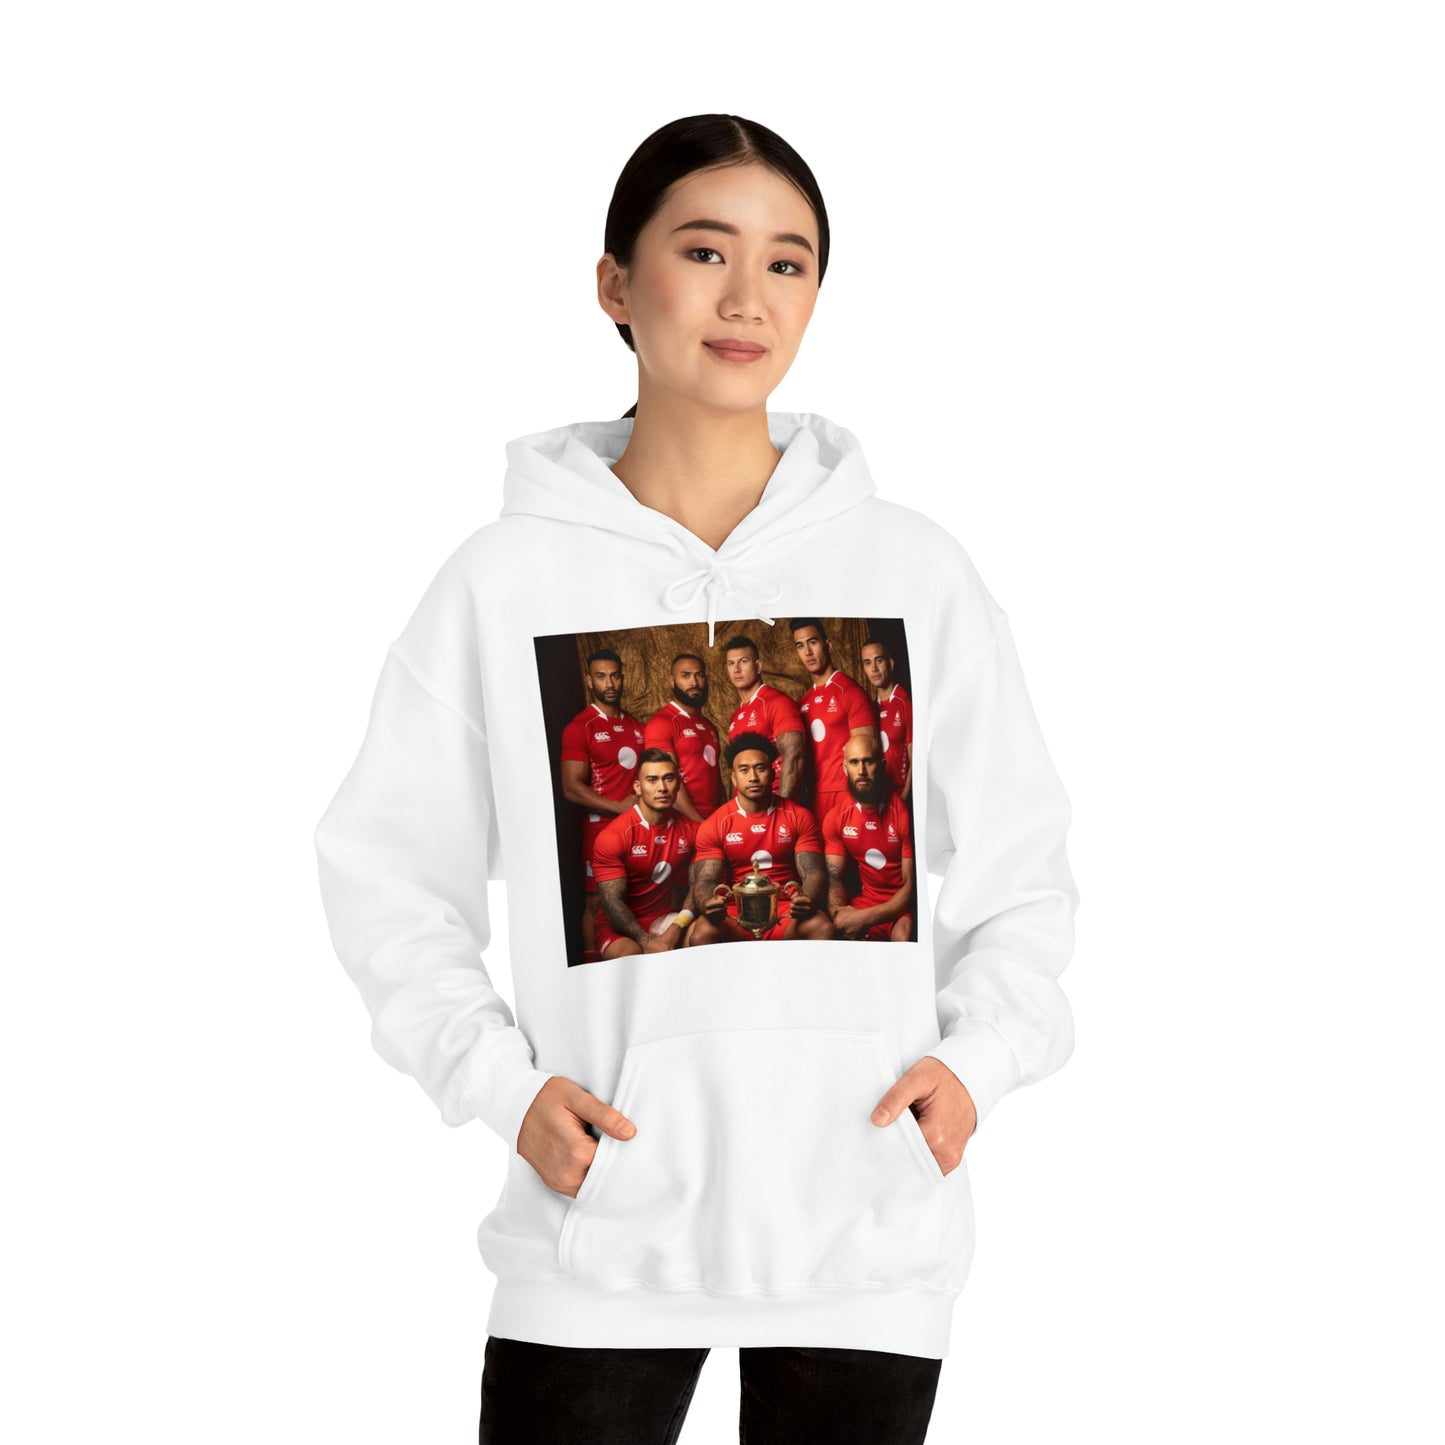 Tonga RWC photoshoot - light hoodies